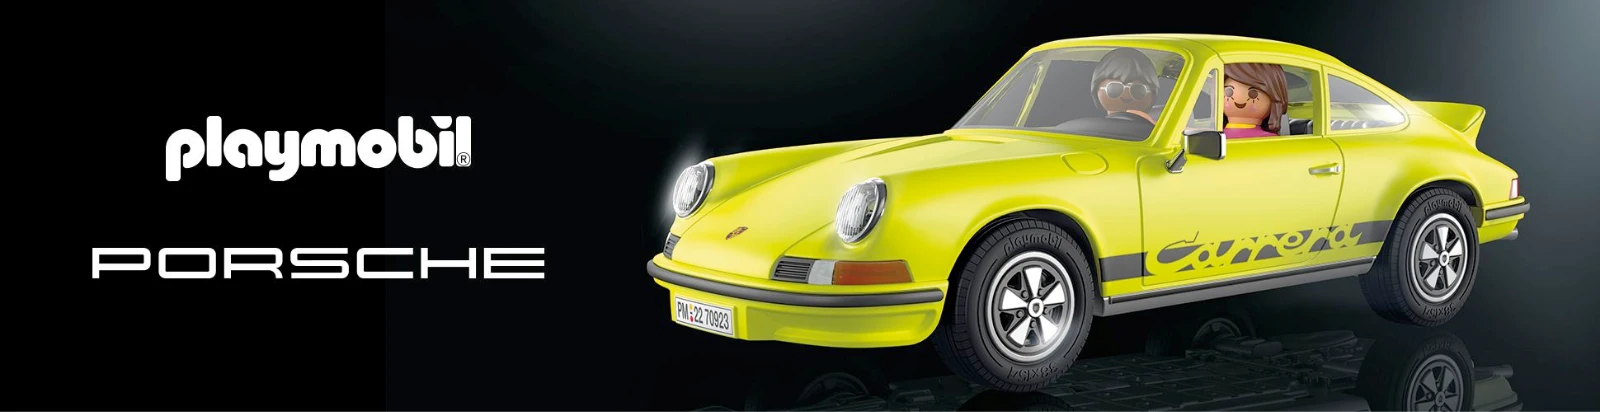 Playmobil Porsche bei Spielzeugwelten.de